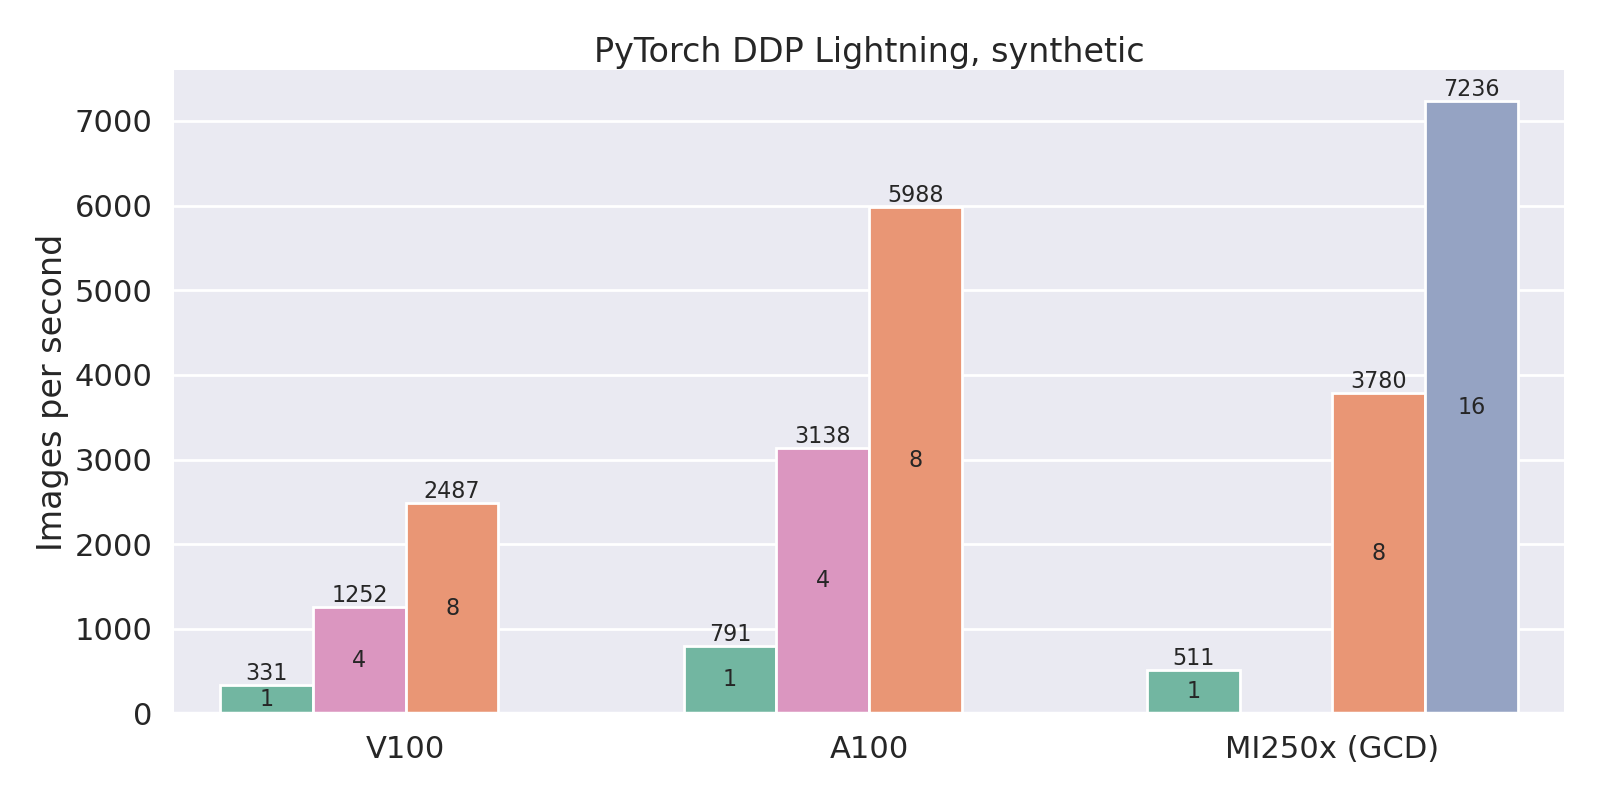 PyTorch DDP Lightning results chart